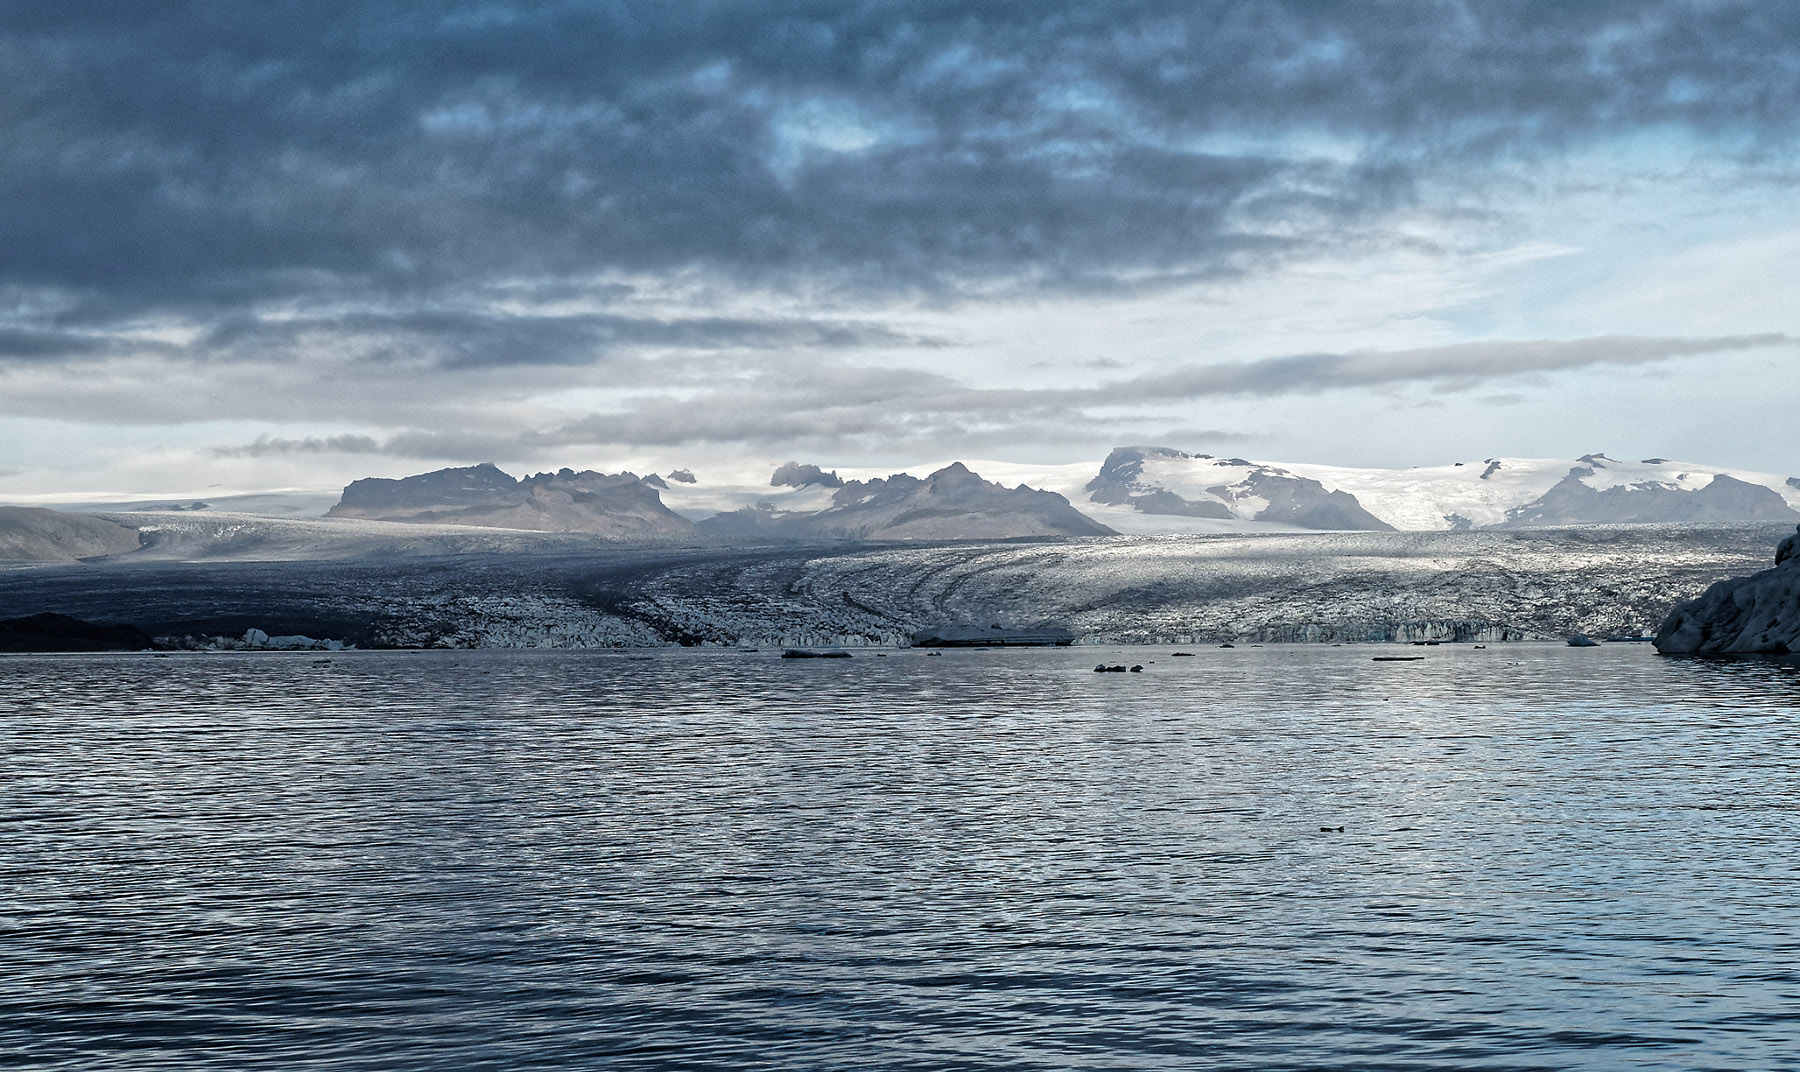 The view of Jökulsárlón glacial lagoon and Breiðamerkurjökull Glacier from the amphibious vehicle.